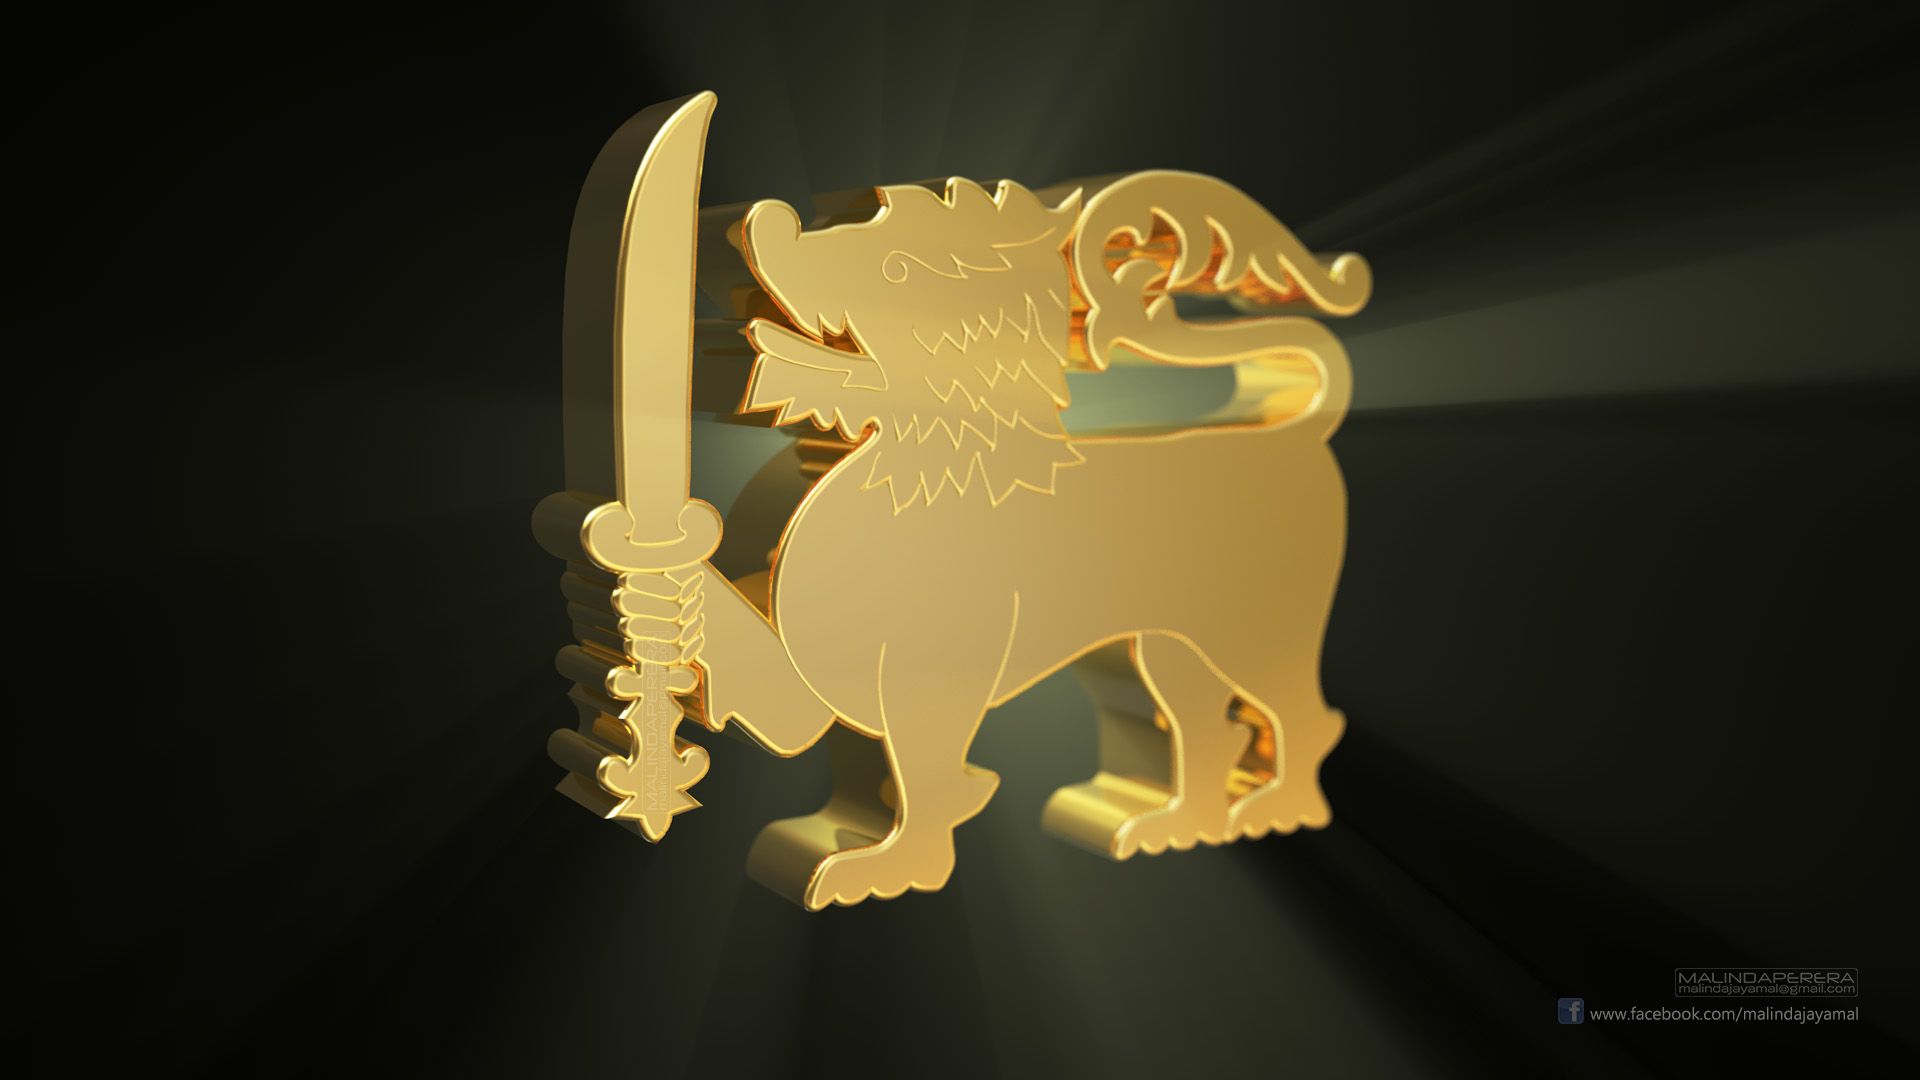 Sri Lanka - Golden Lion HD Wallpaper 1080 by Malindaperera